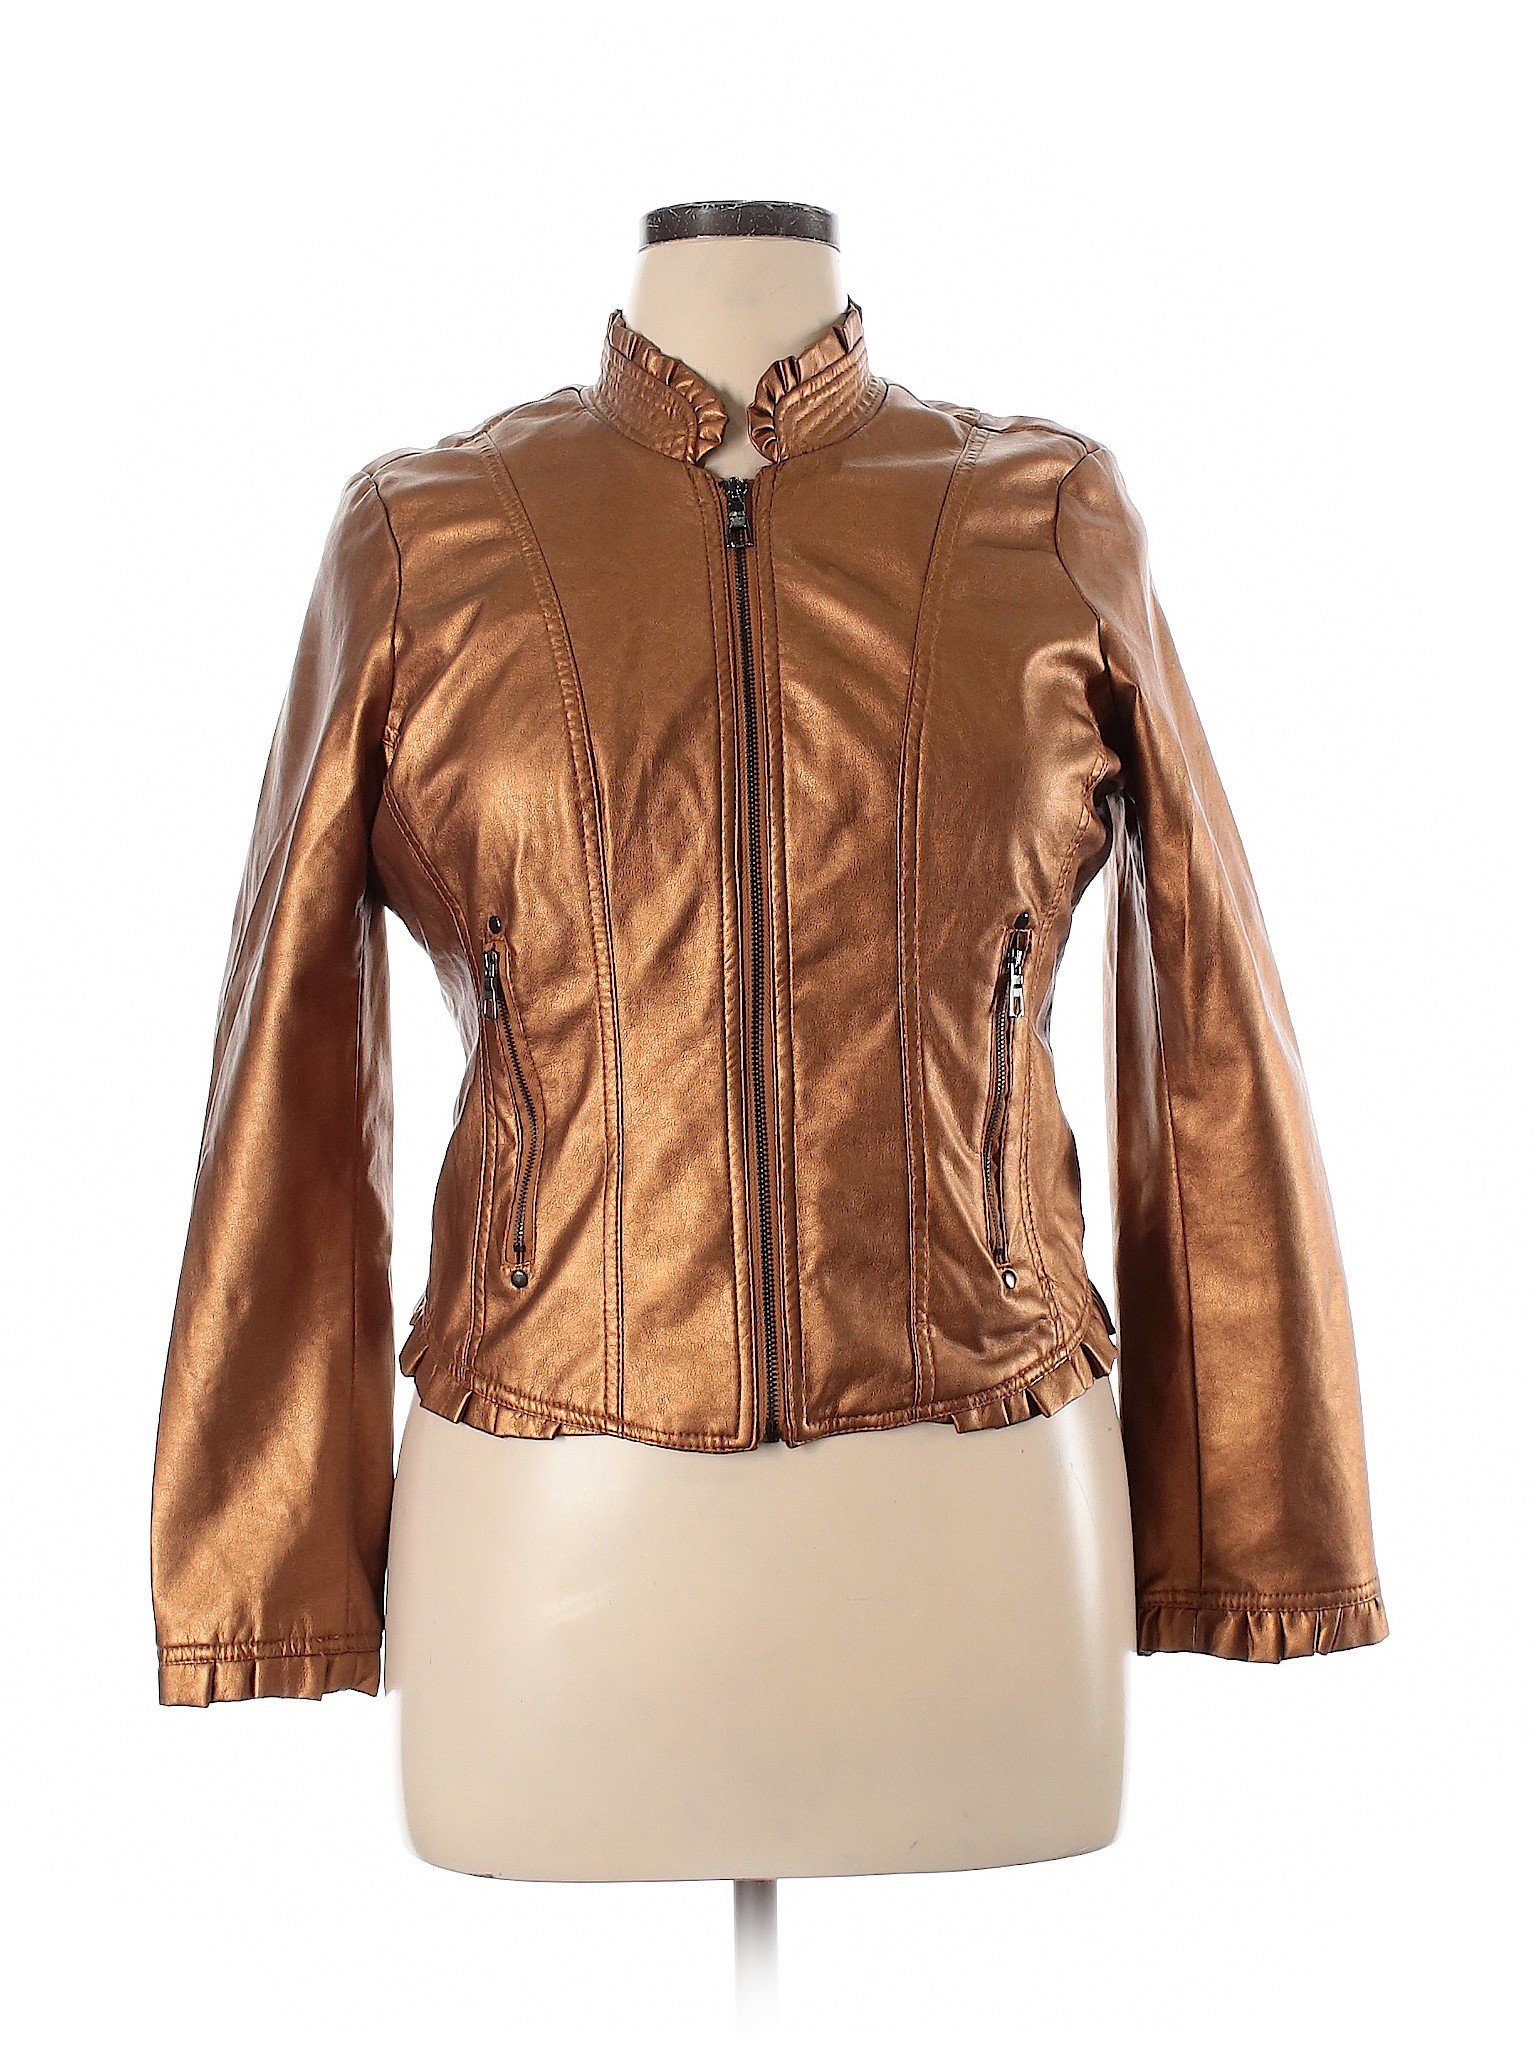 Pimkie Women Brown Faux Leather Jacket XL Petites | eBay